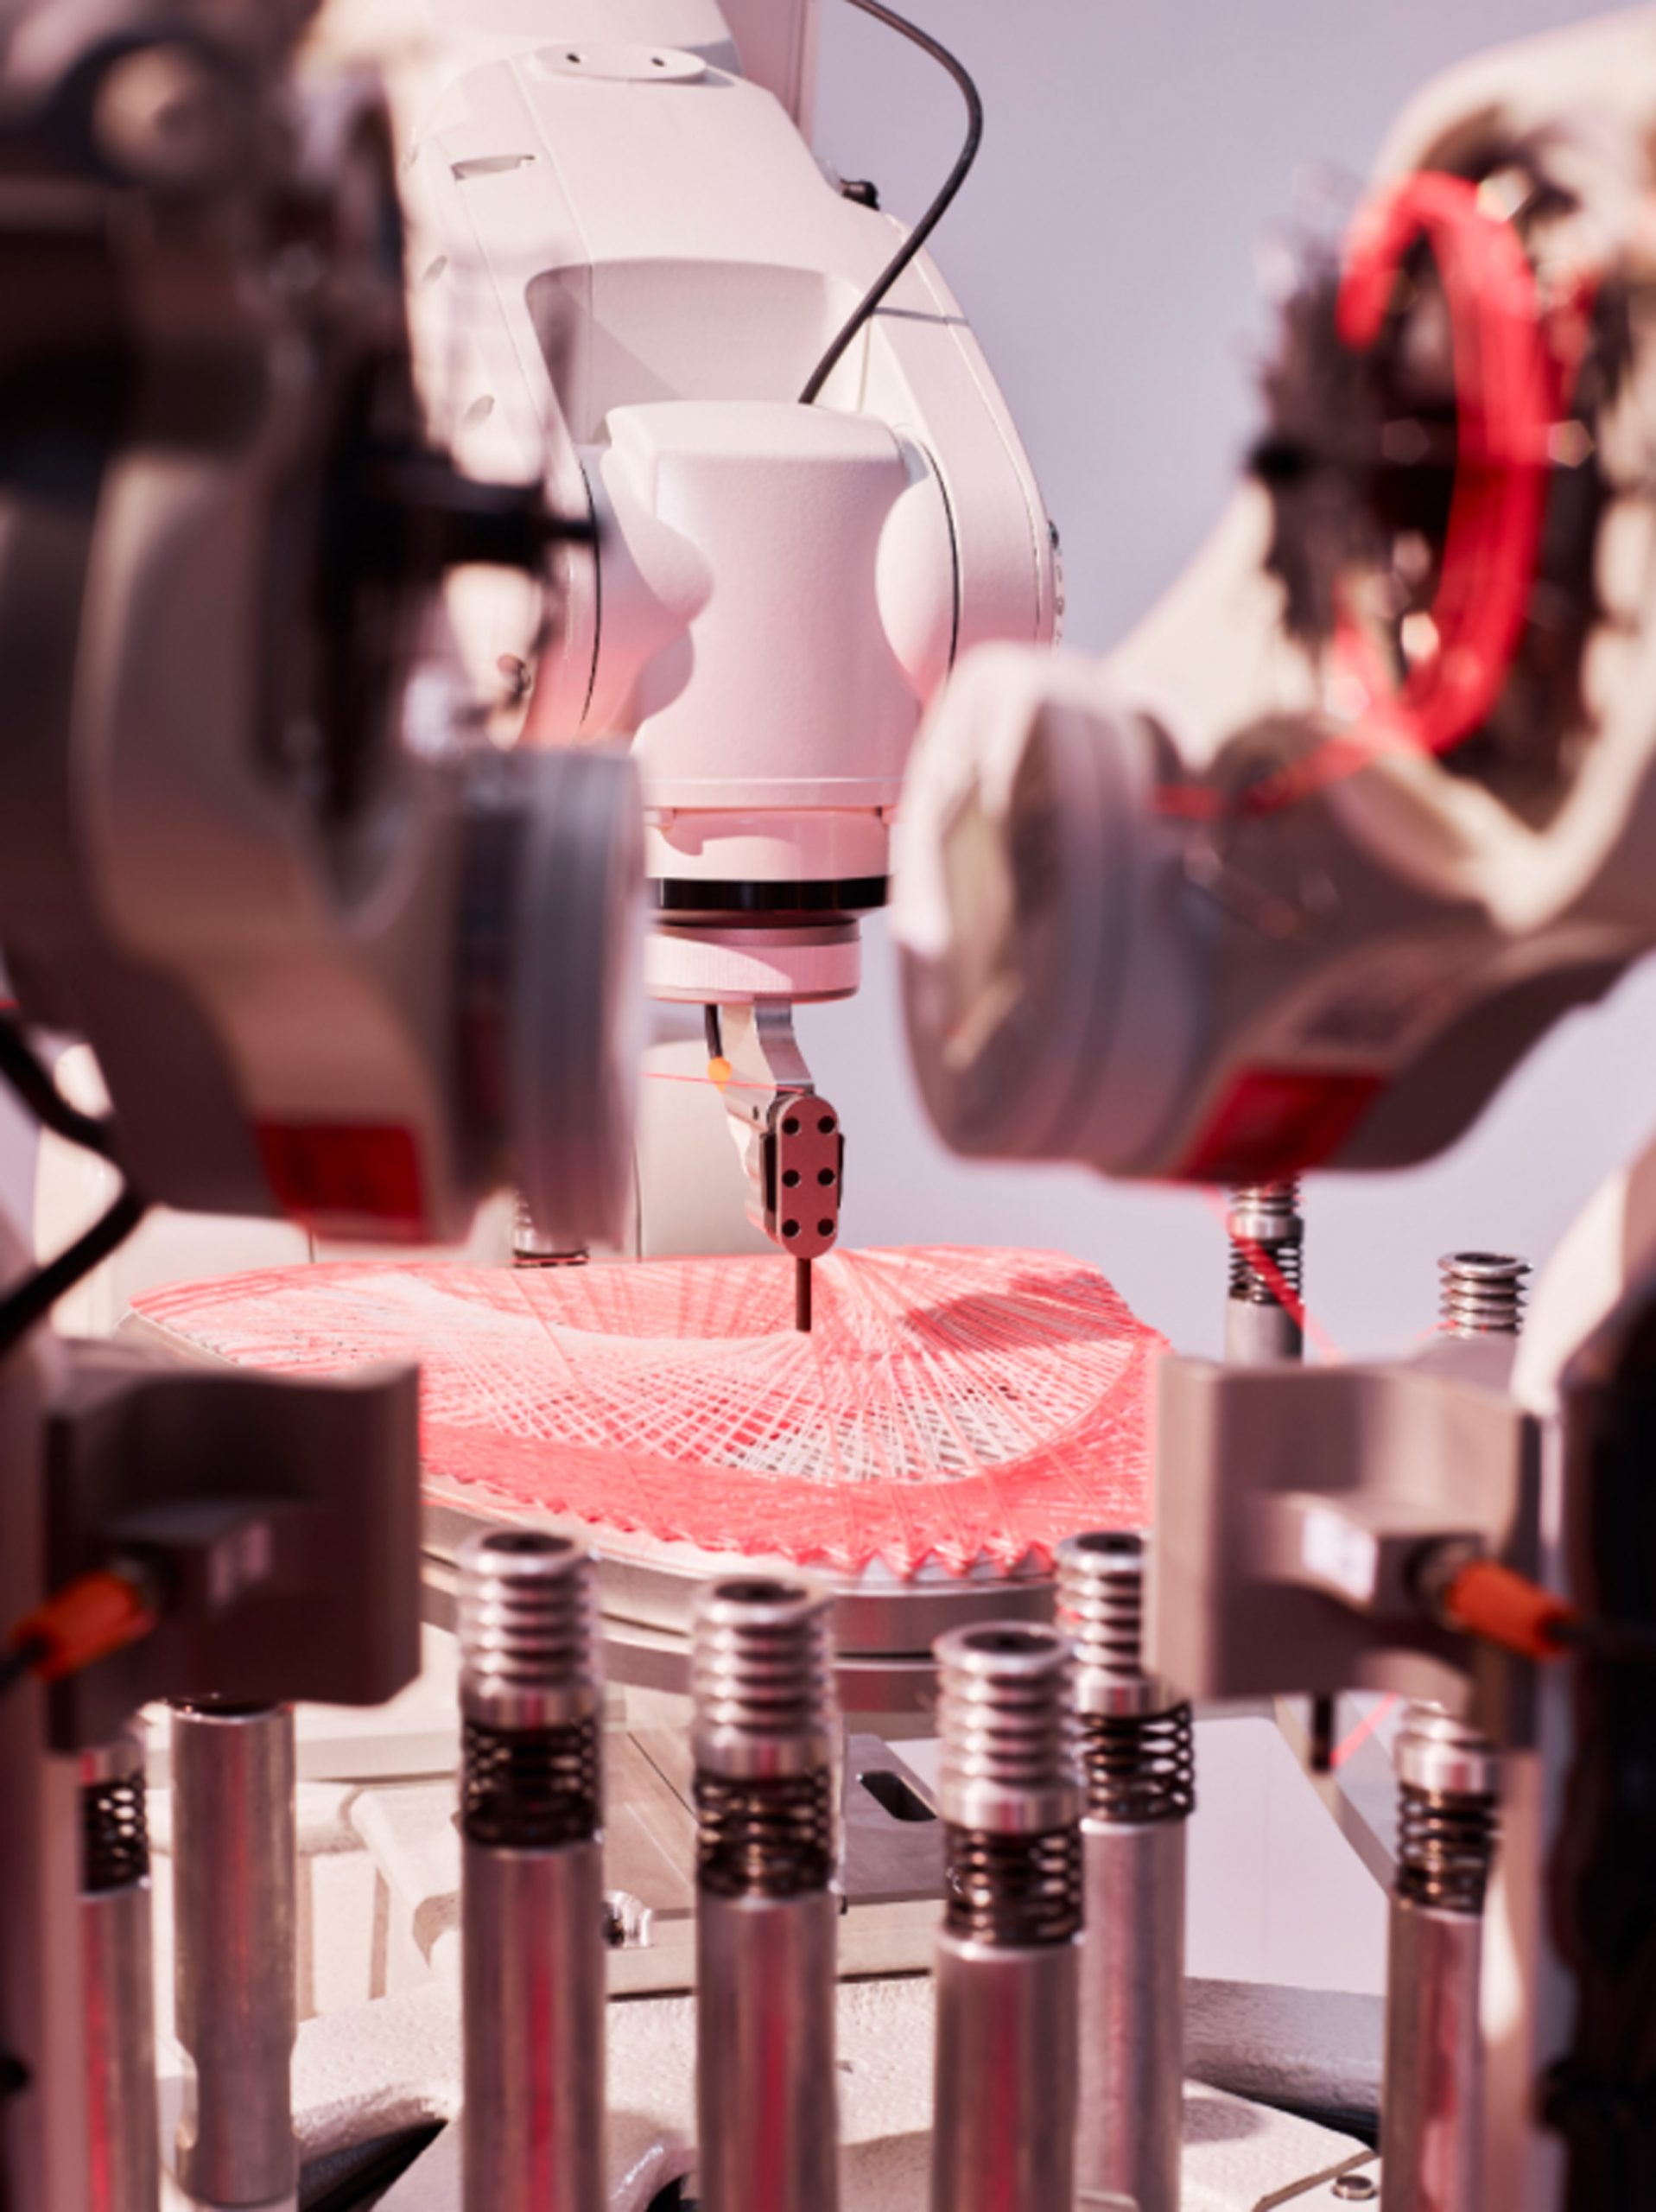 Robot weaving Adidas's Strung uppers